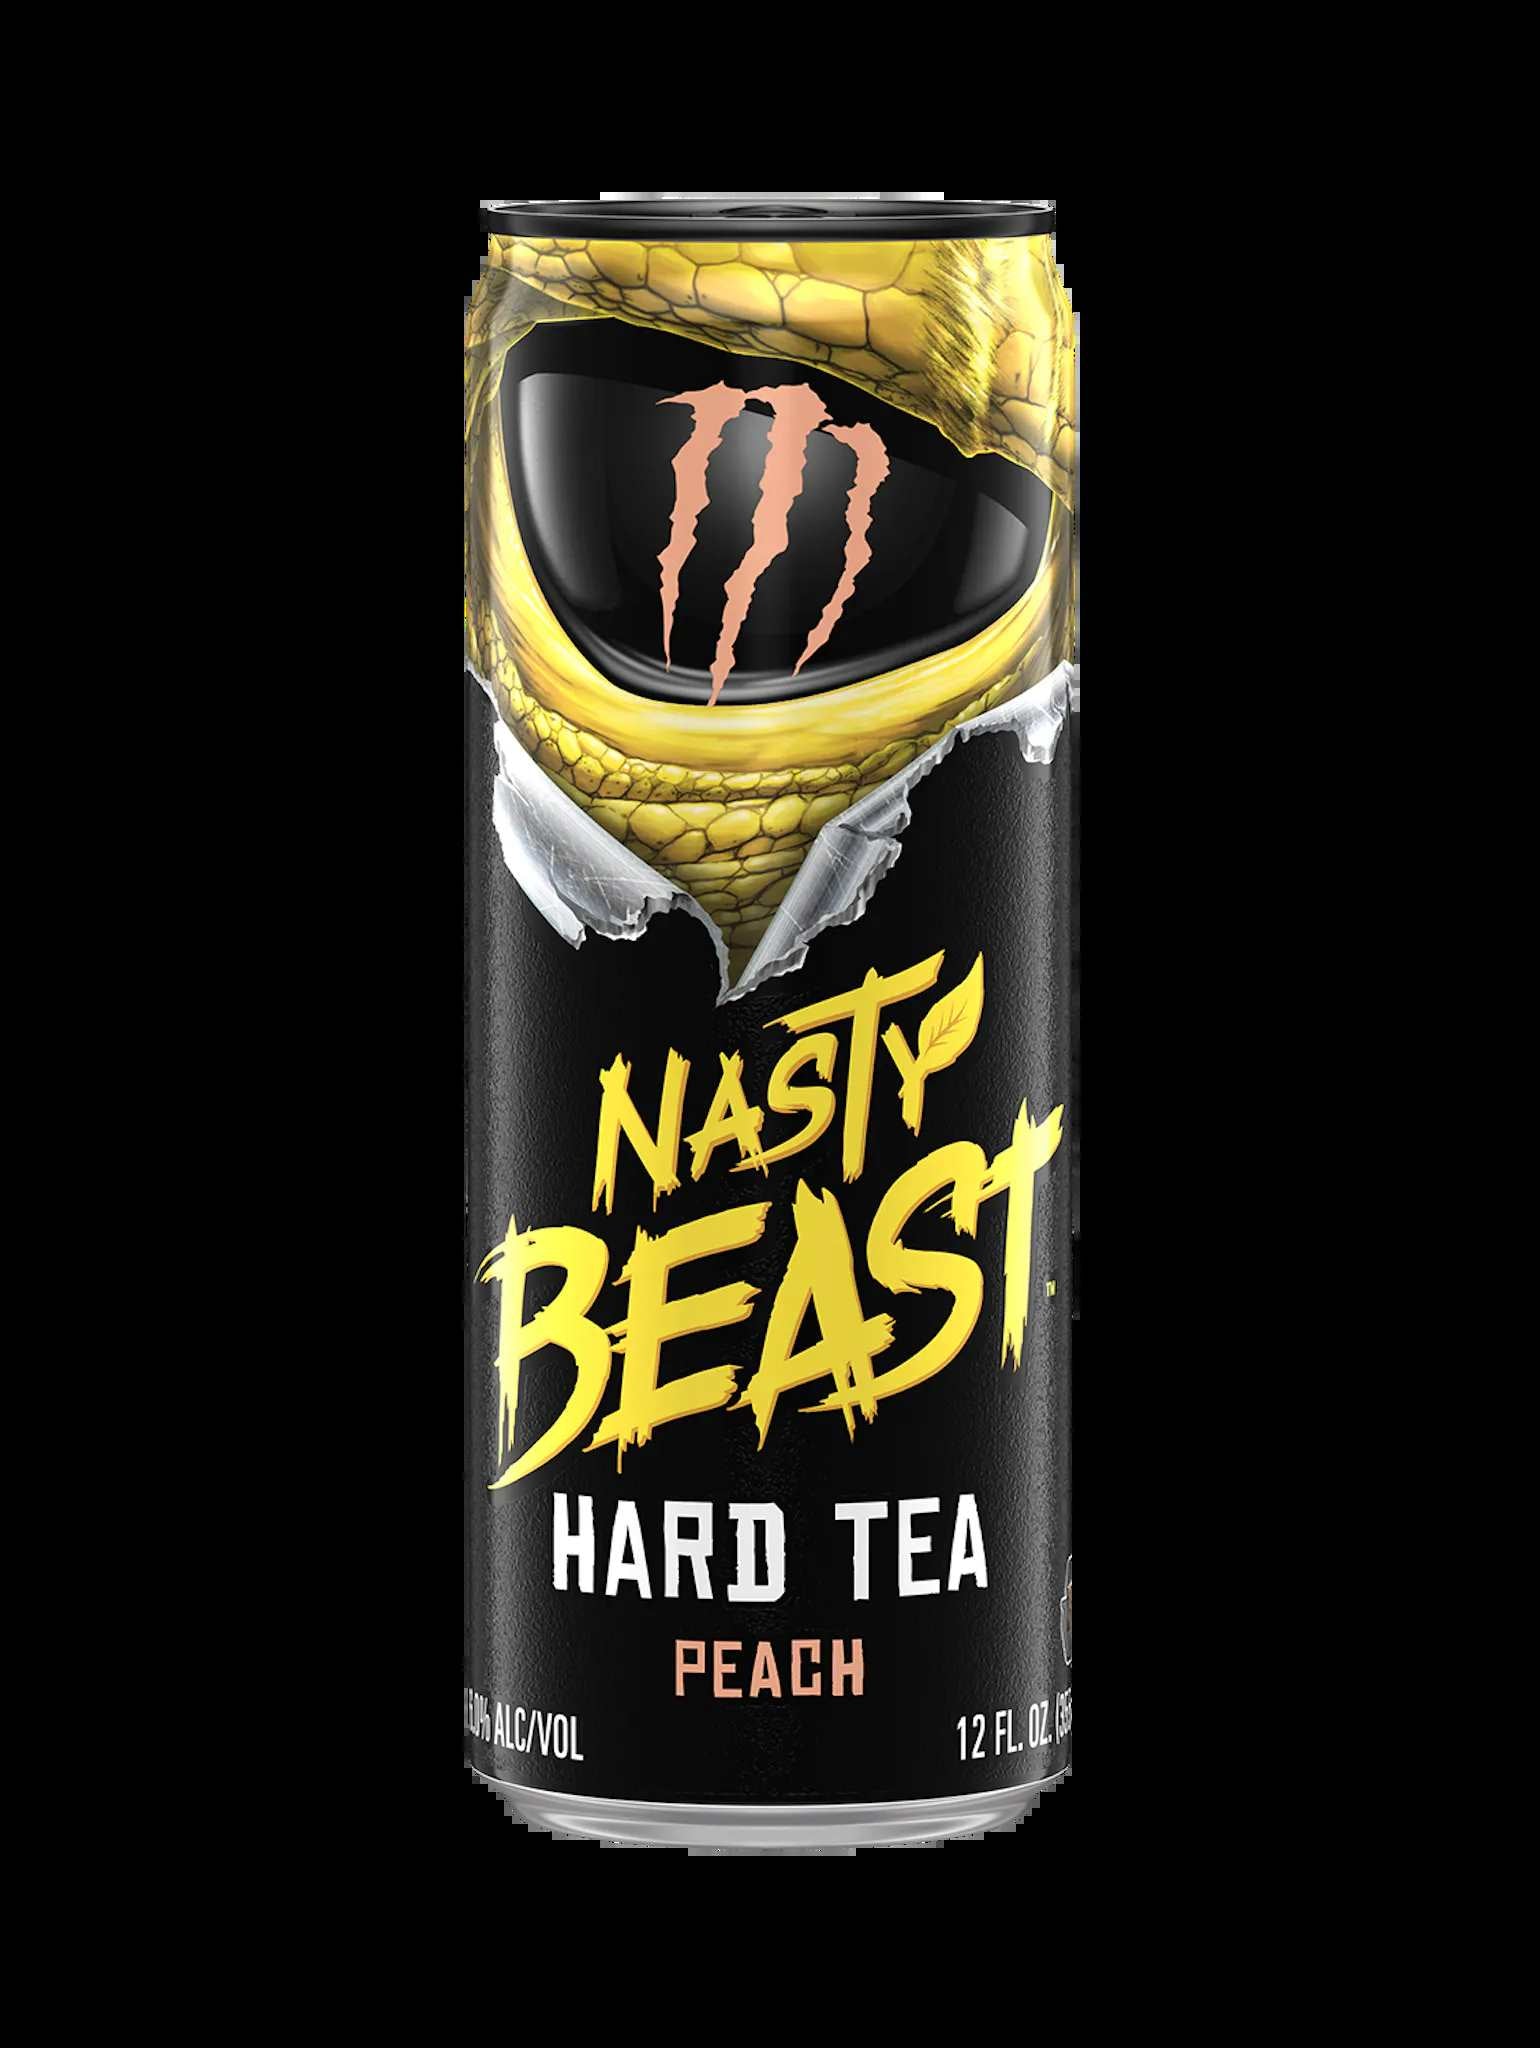 Monster Nasty Beast Hard Tea Peach 355 ml FULL beast beast unleashed beast24 hard tea monster monster energy nasty nasty beast newest not-on-sale unleashed usa